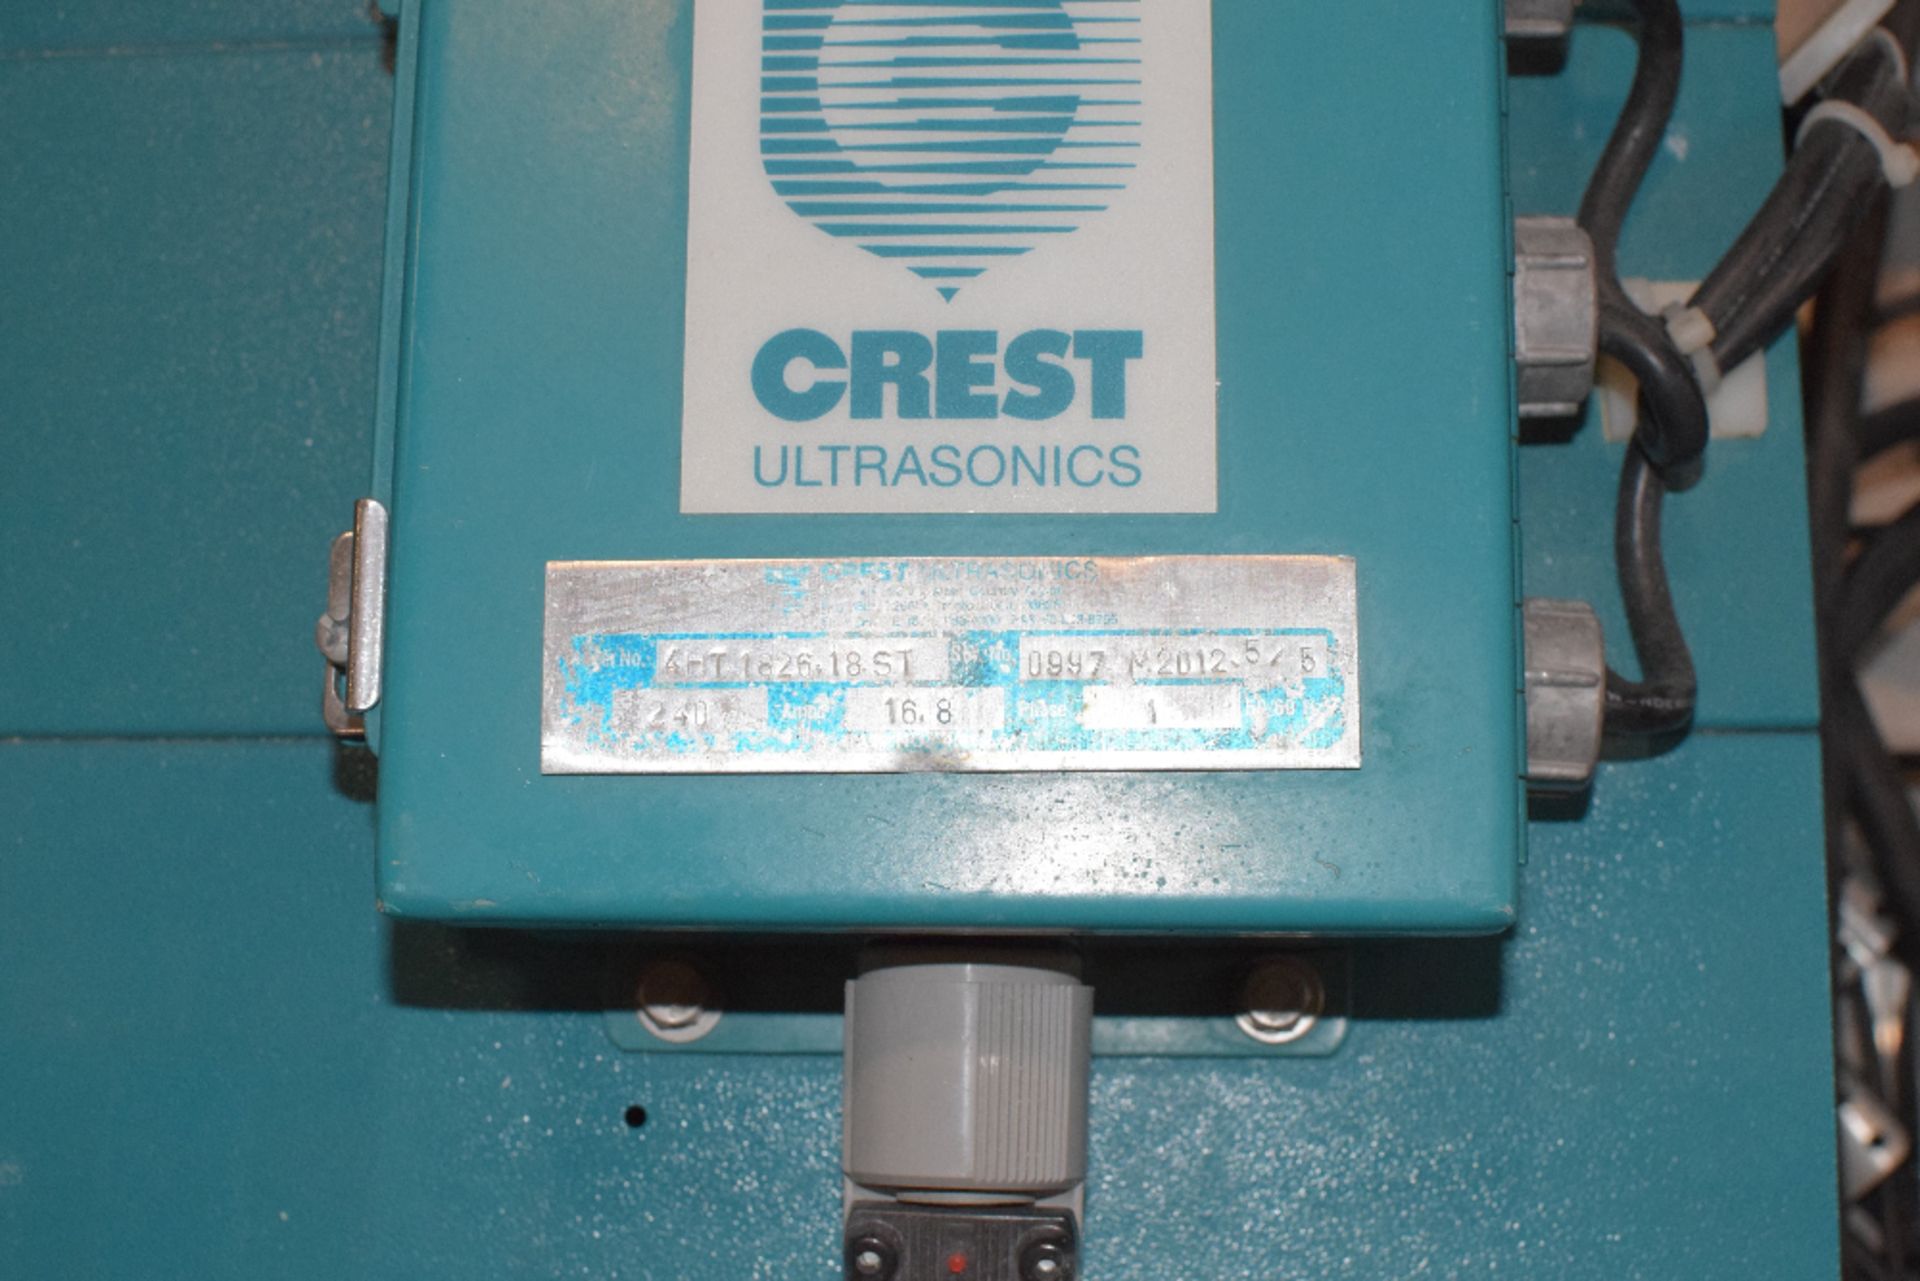 Crest Ultrasonics 4HT1826.18.ST Portable Cleaner - Image 7 of 9